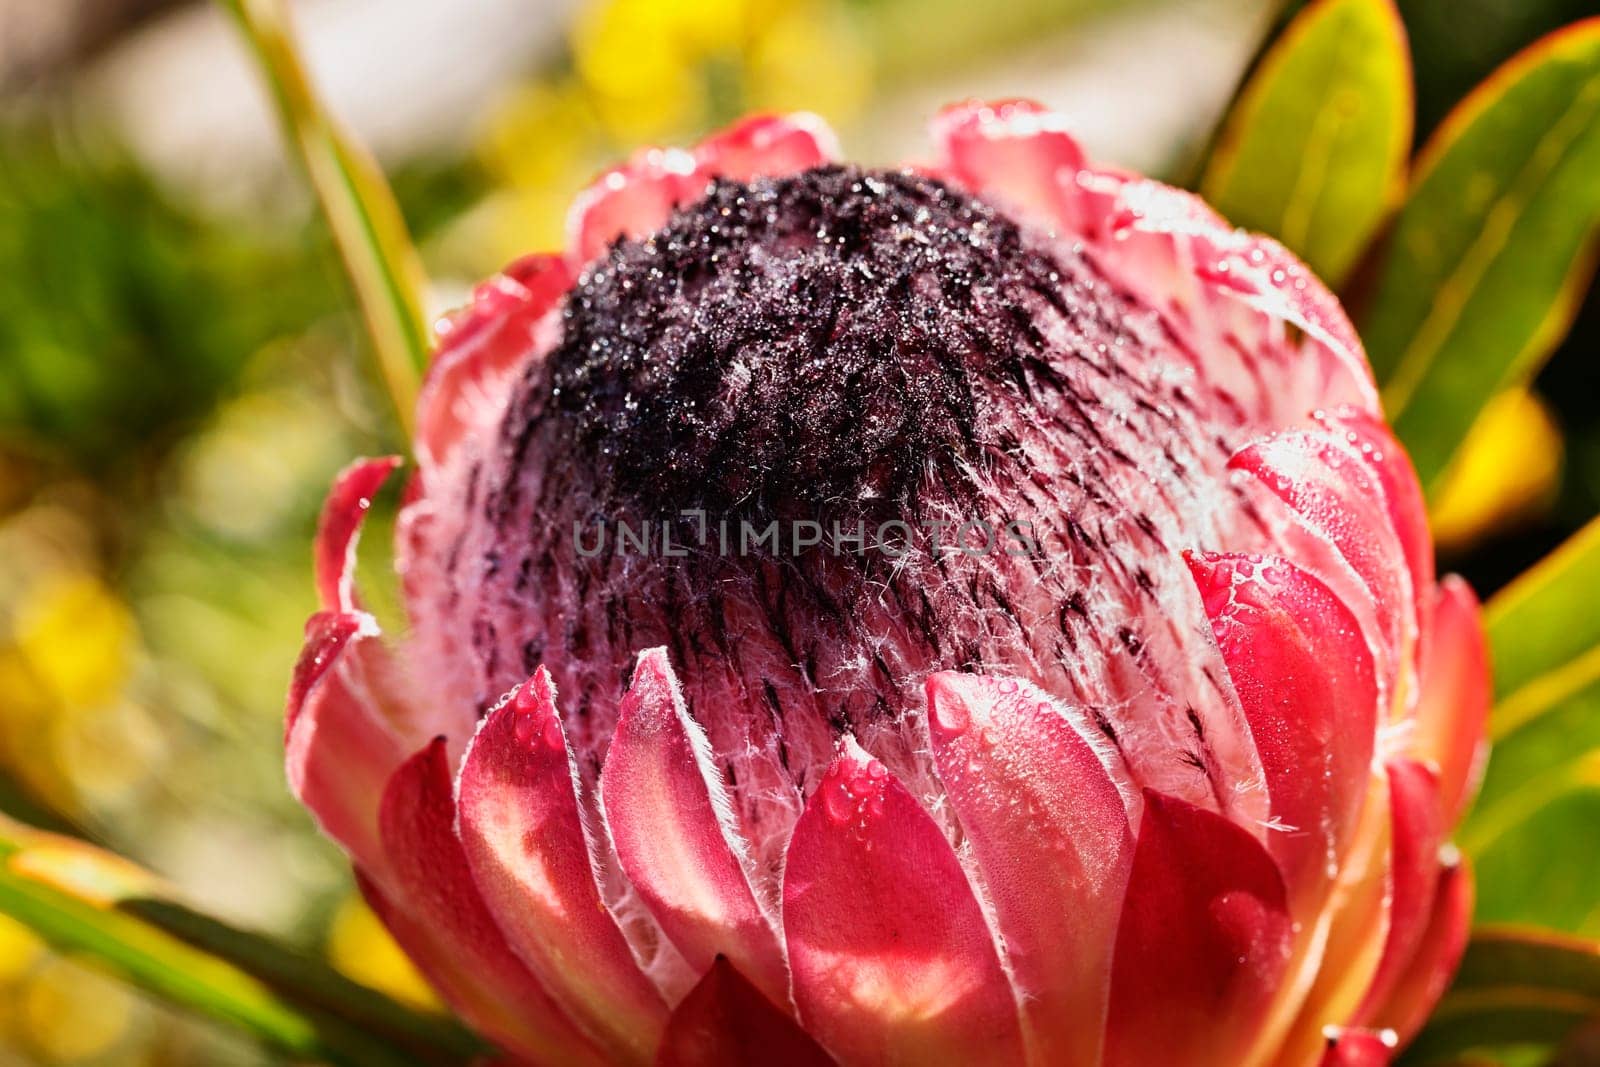 Flower of sugarbush protea, South African springtime flowering plant